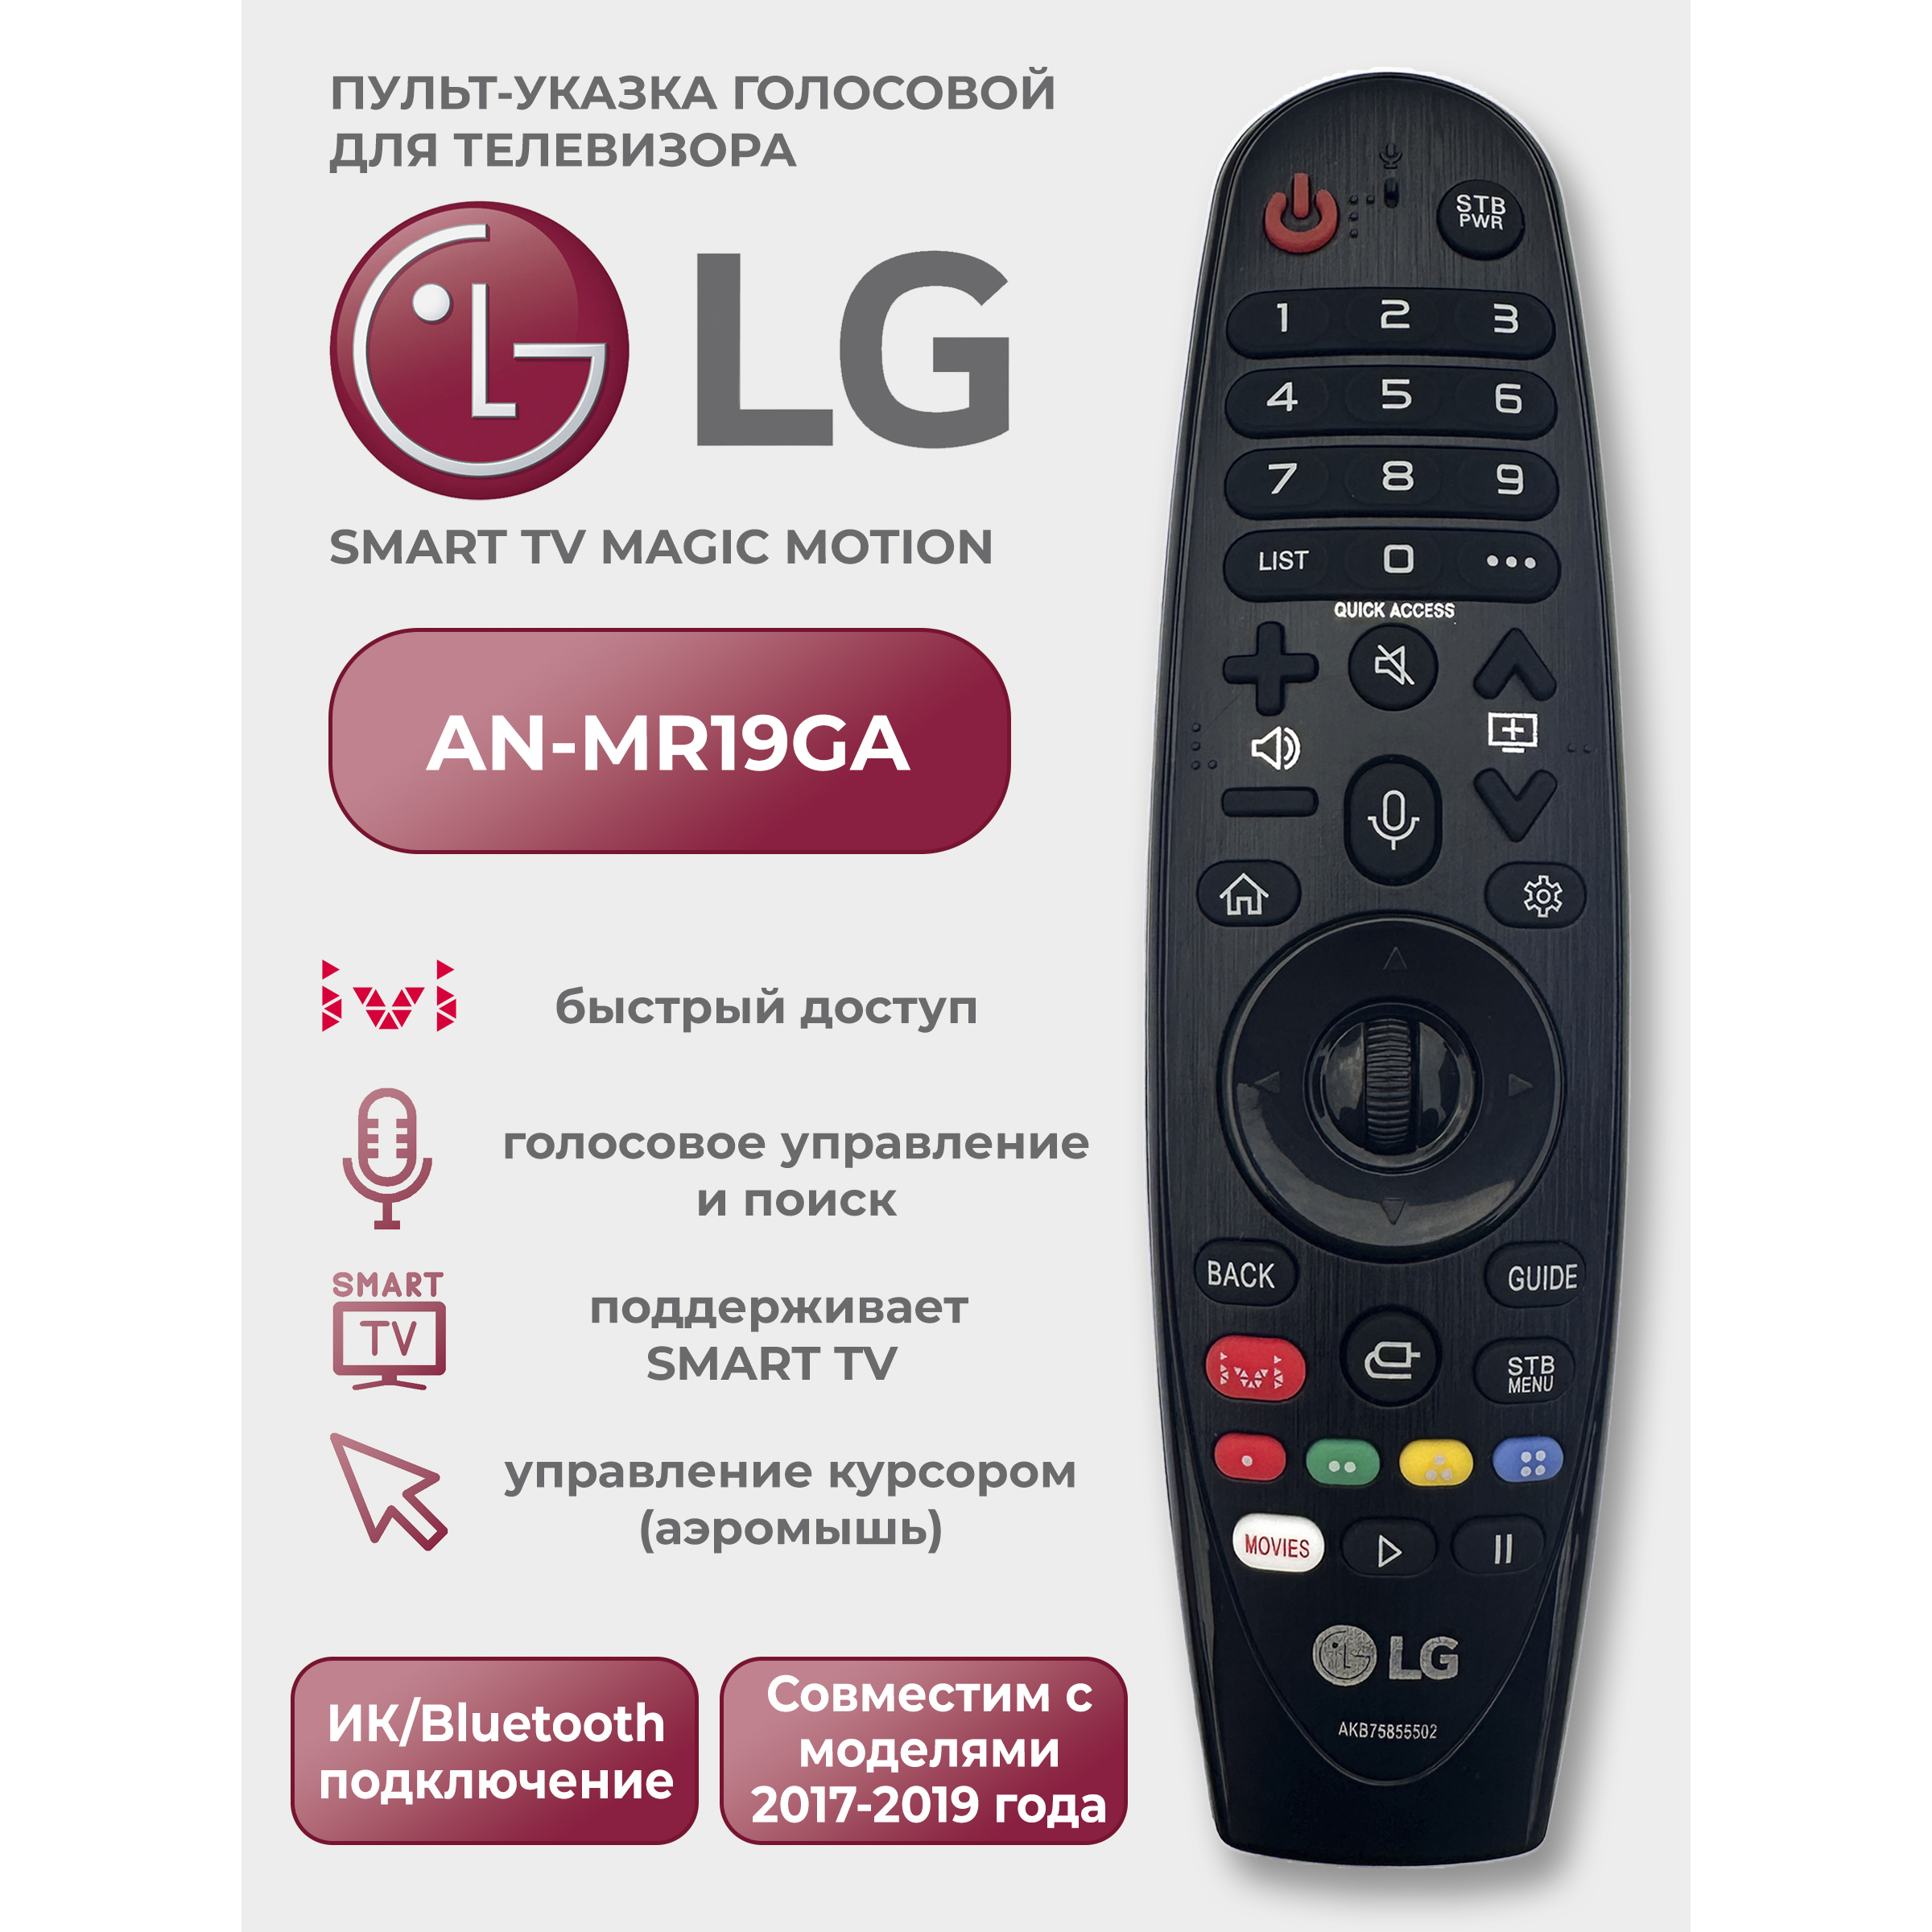 Пульт ду LG Smart TV Magic Motion AN-MR19BA